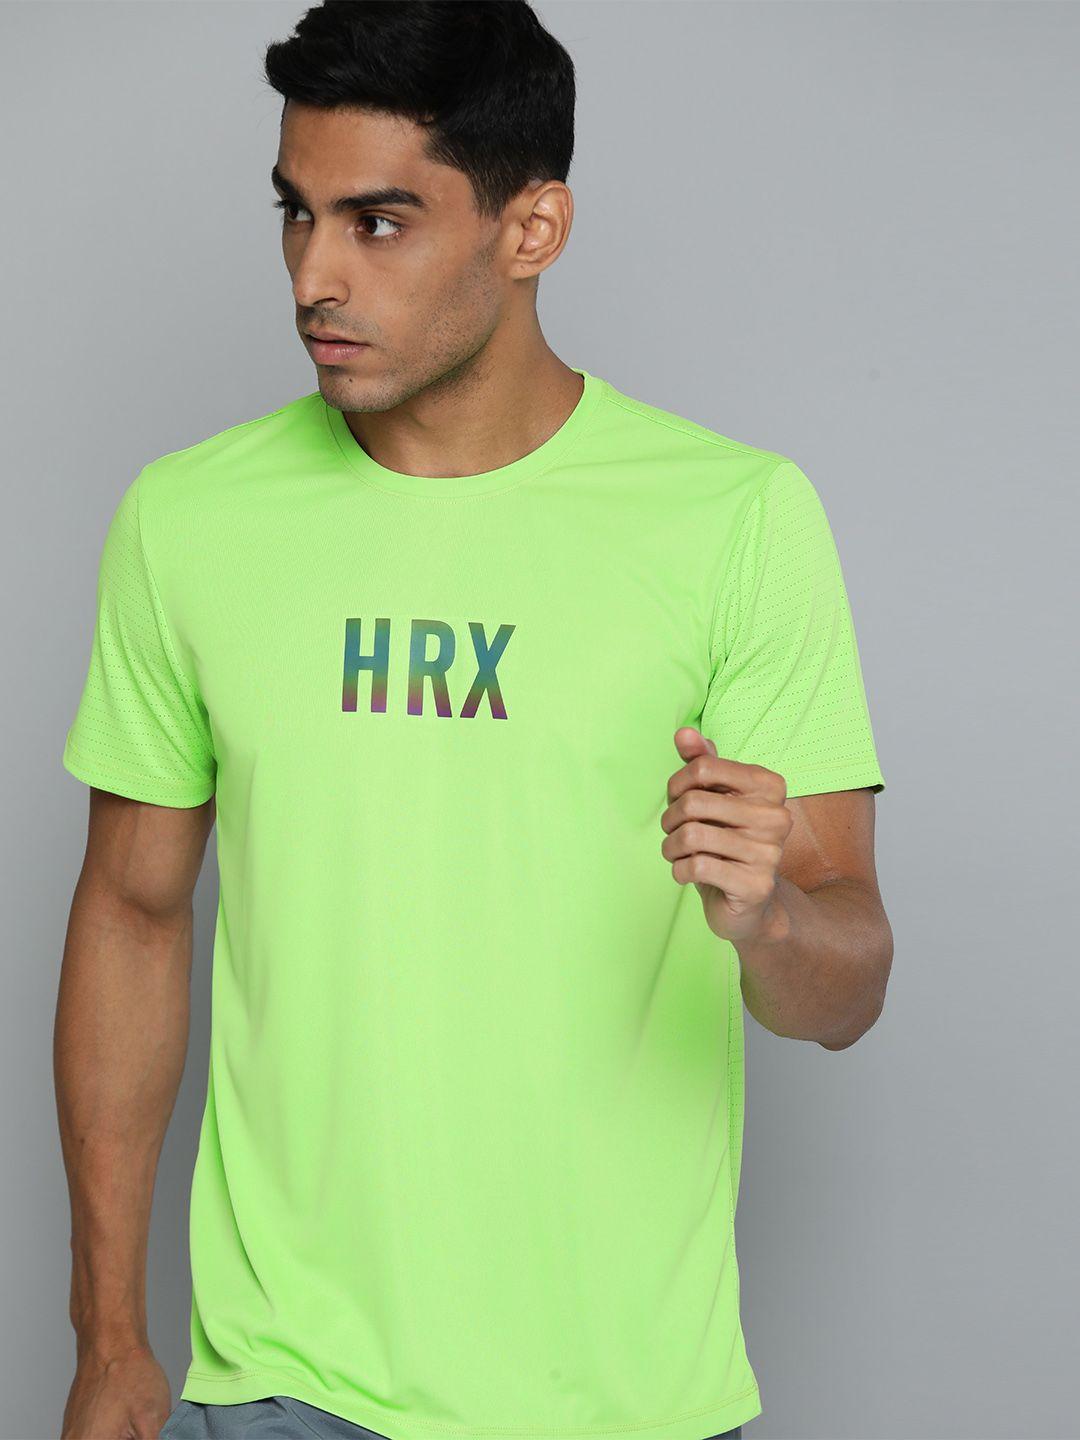 hrx by hrithik roshan brand logo printed rapid-dry sports t-shirt